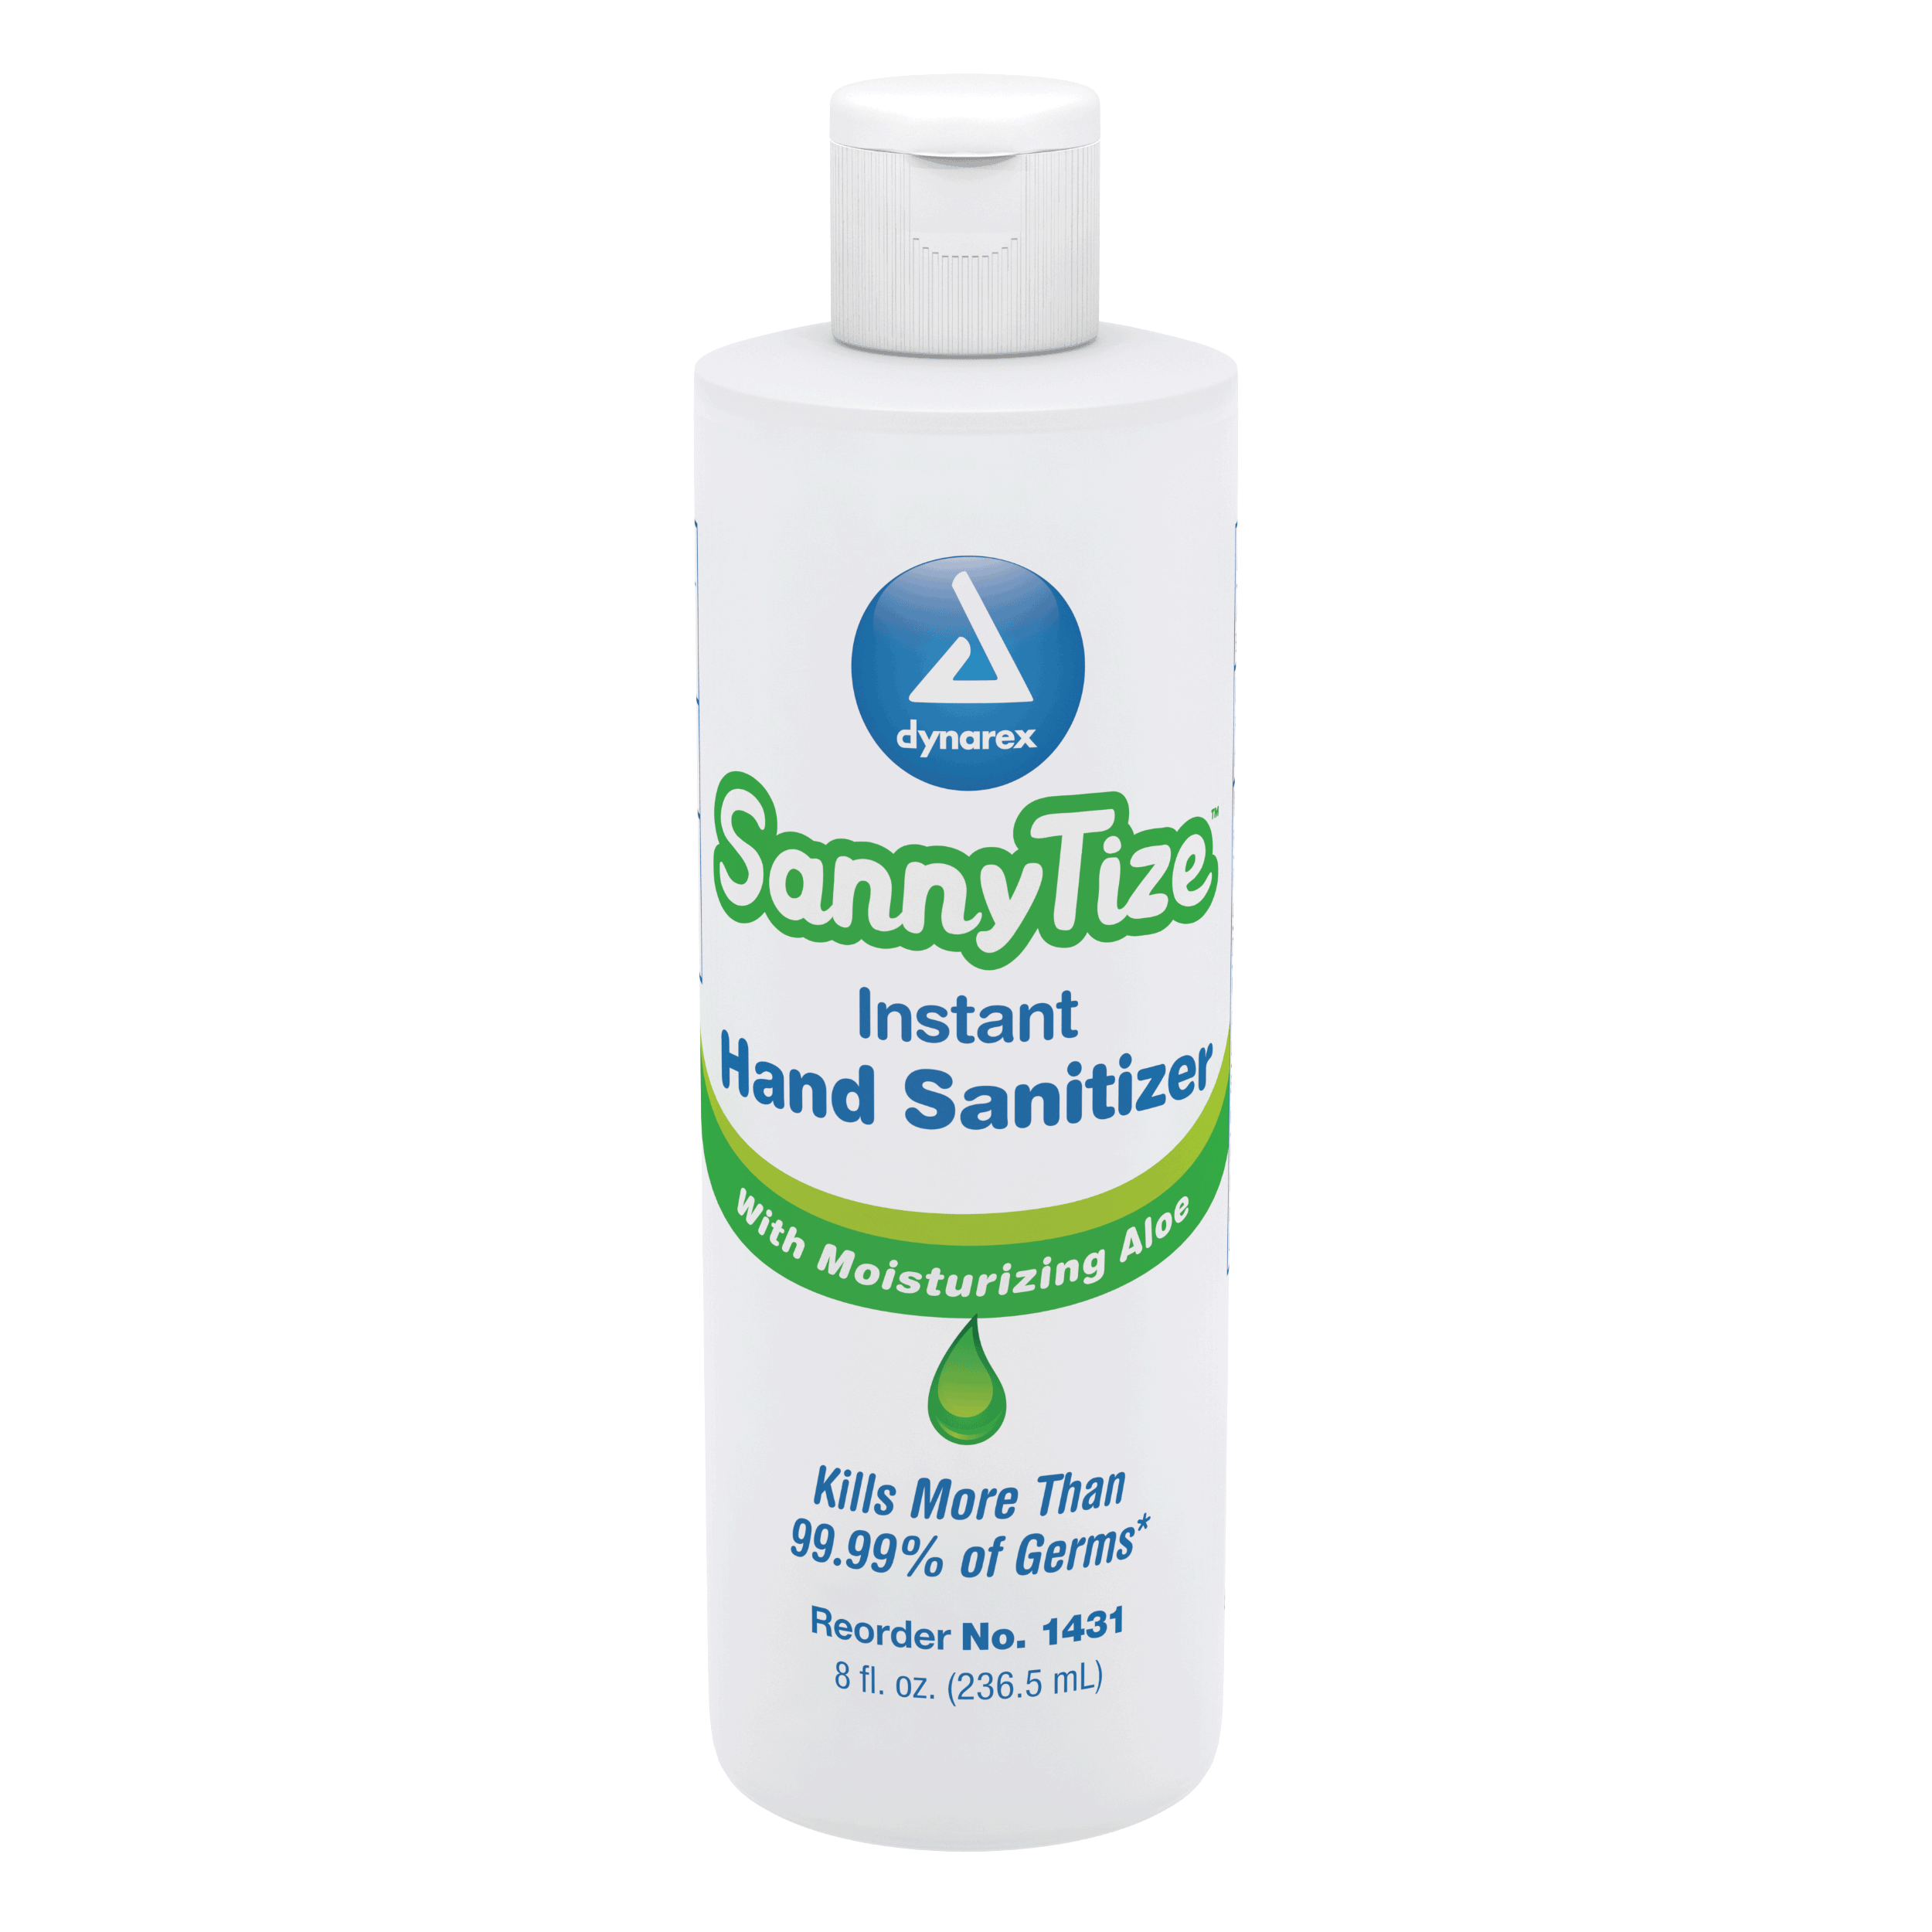 SannyTize Instant Hand Sanitizer 8 oz - round bottle